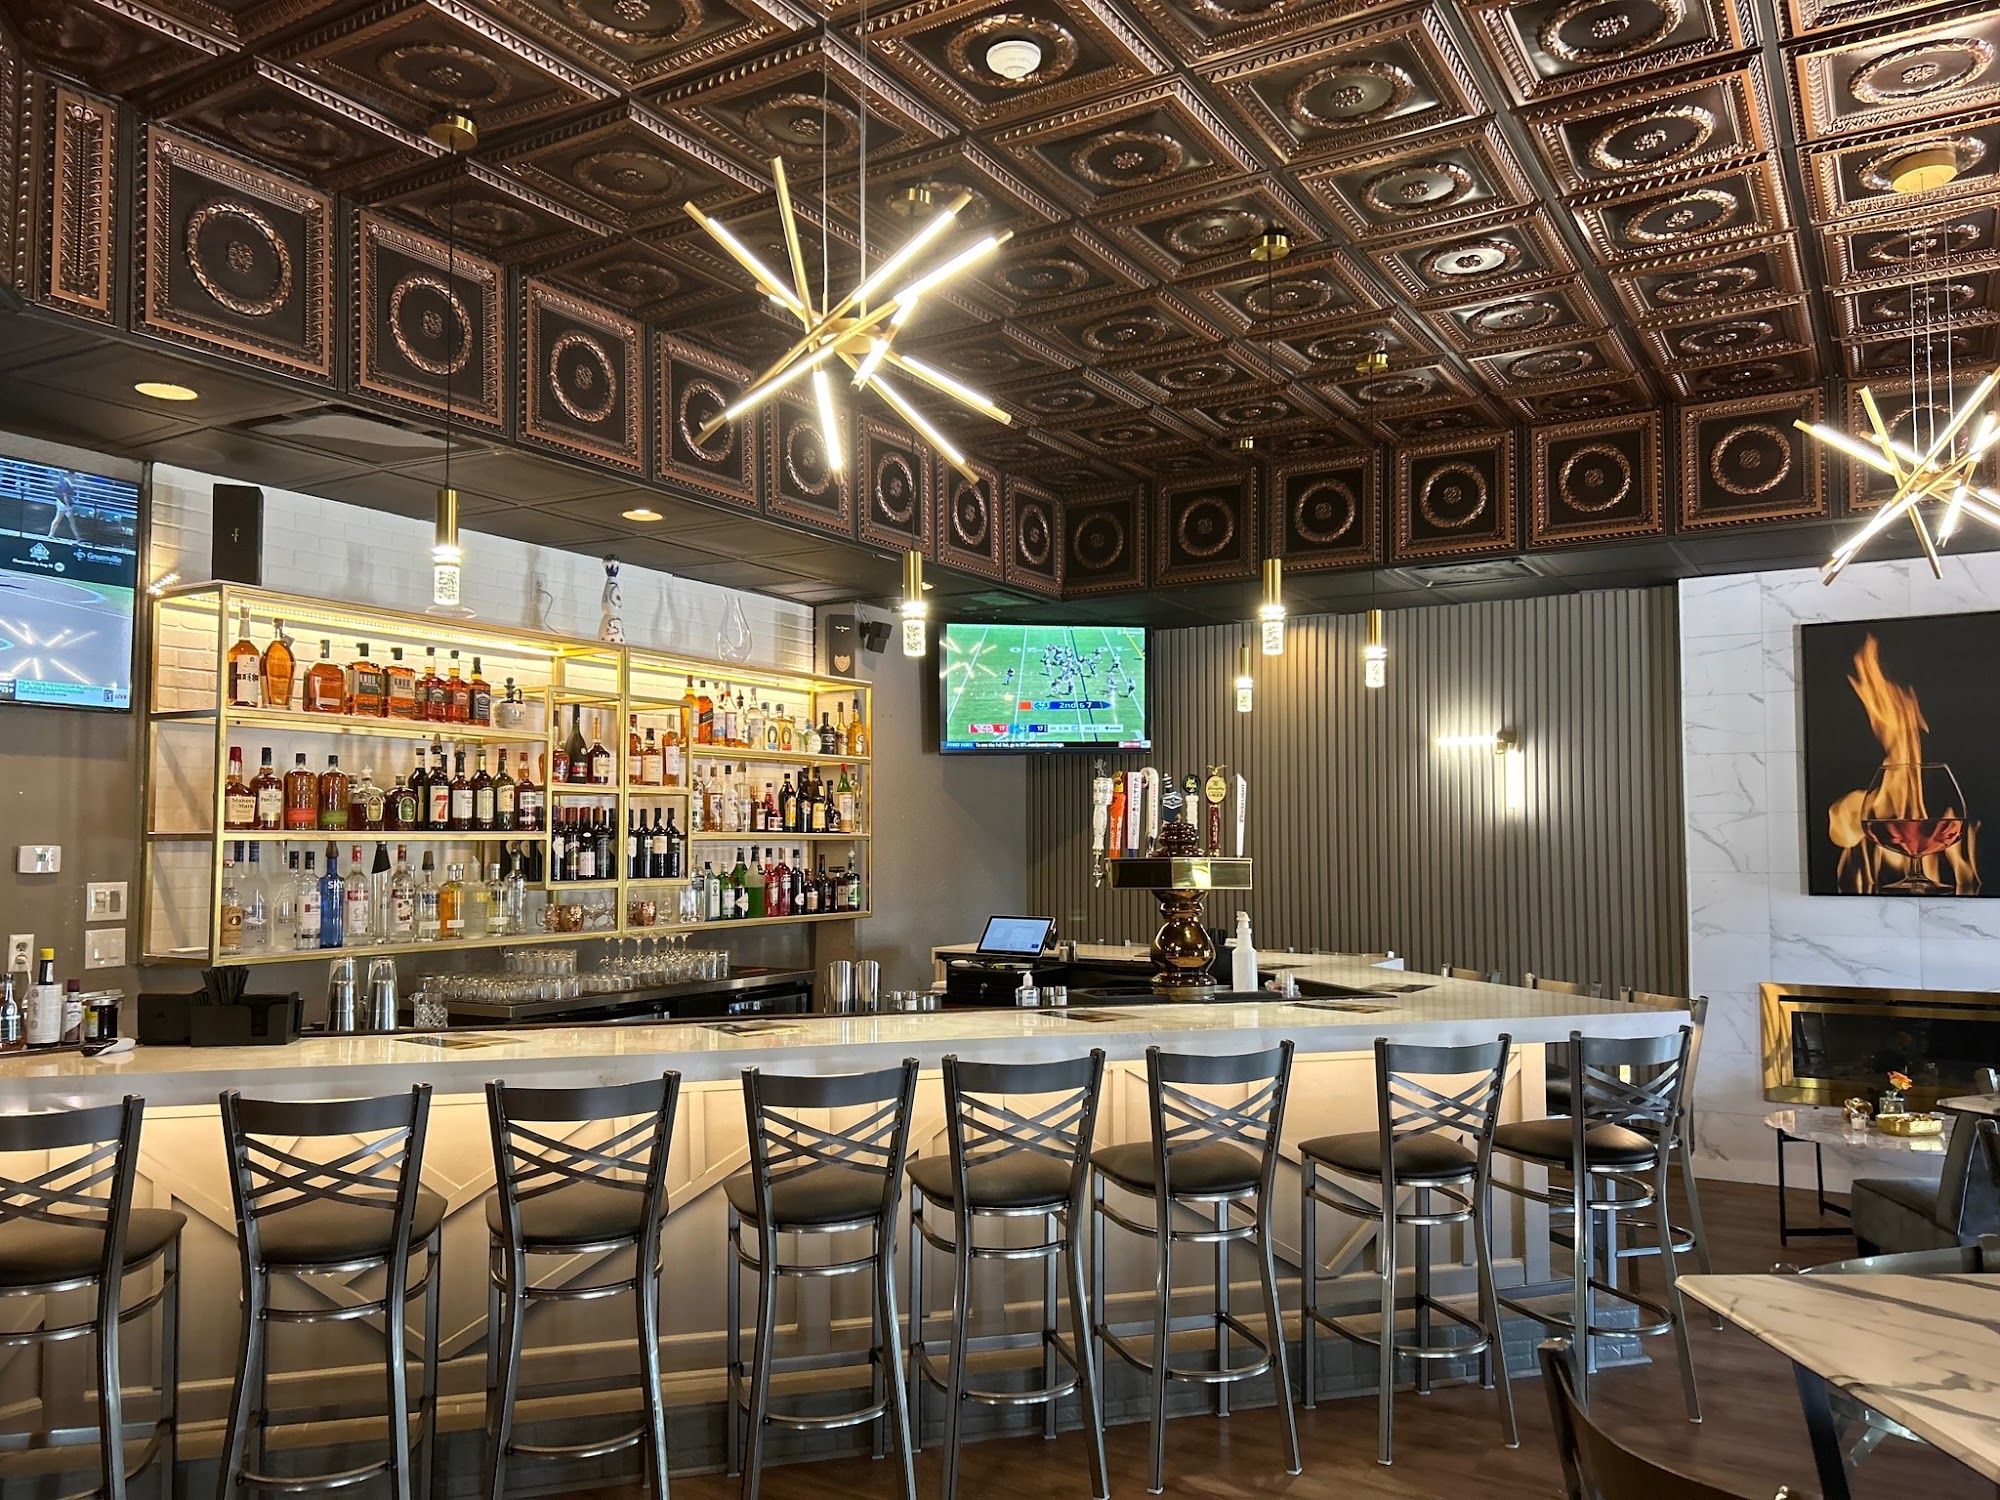 NEAT: Best Bar Food Lounge in Sarasota